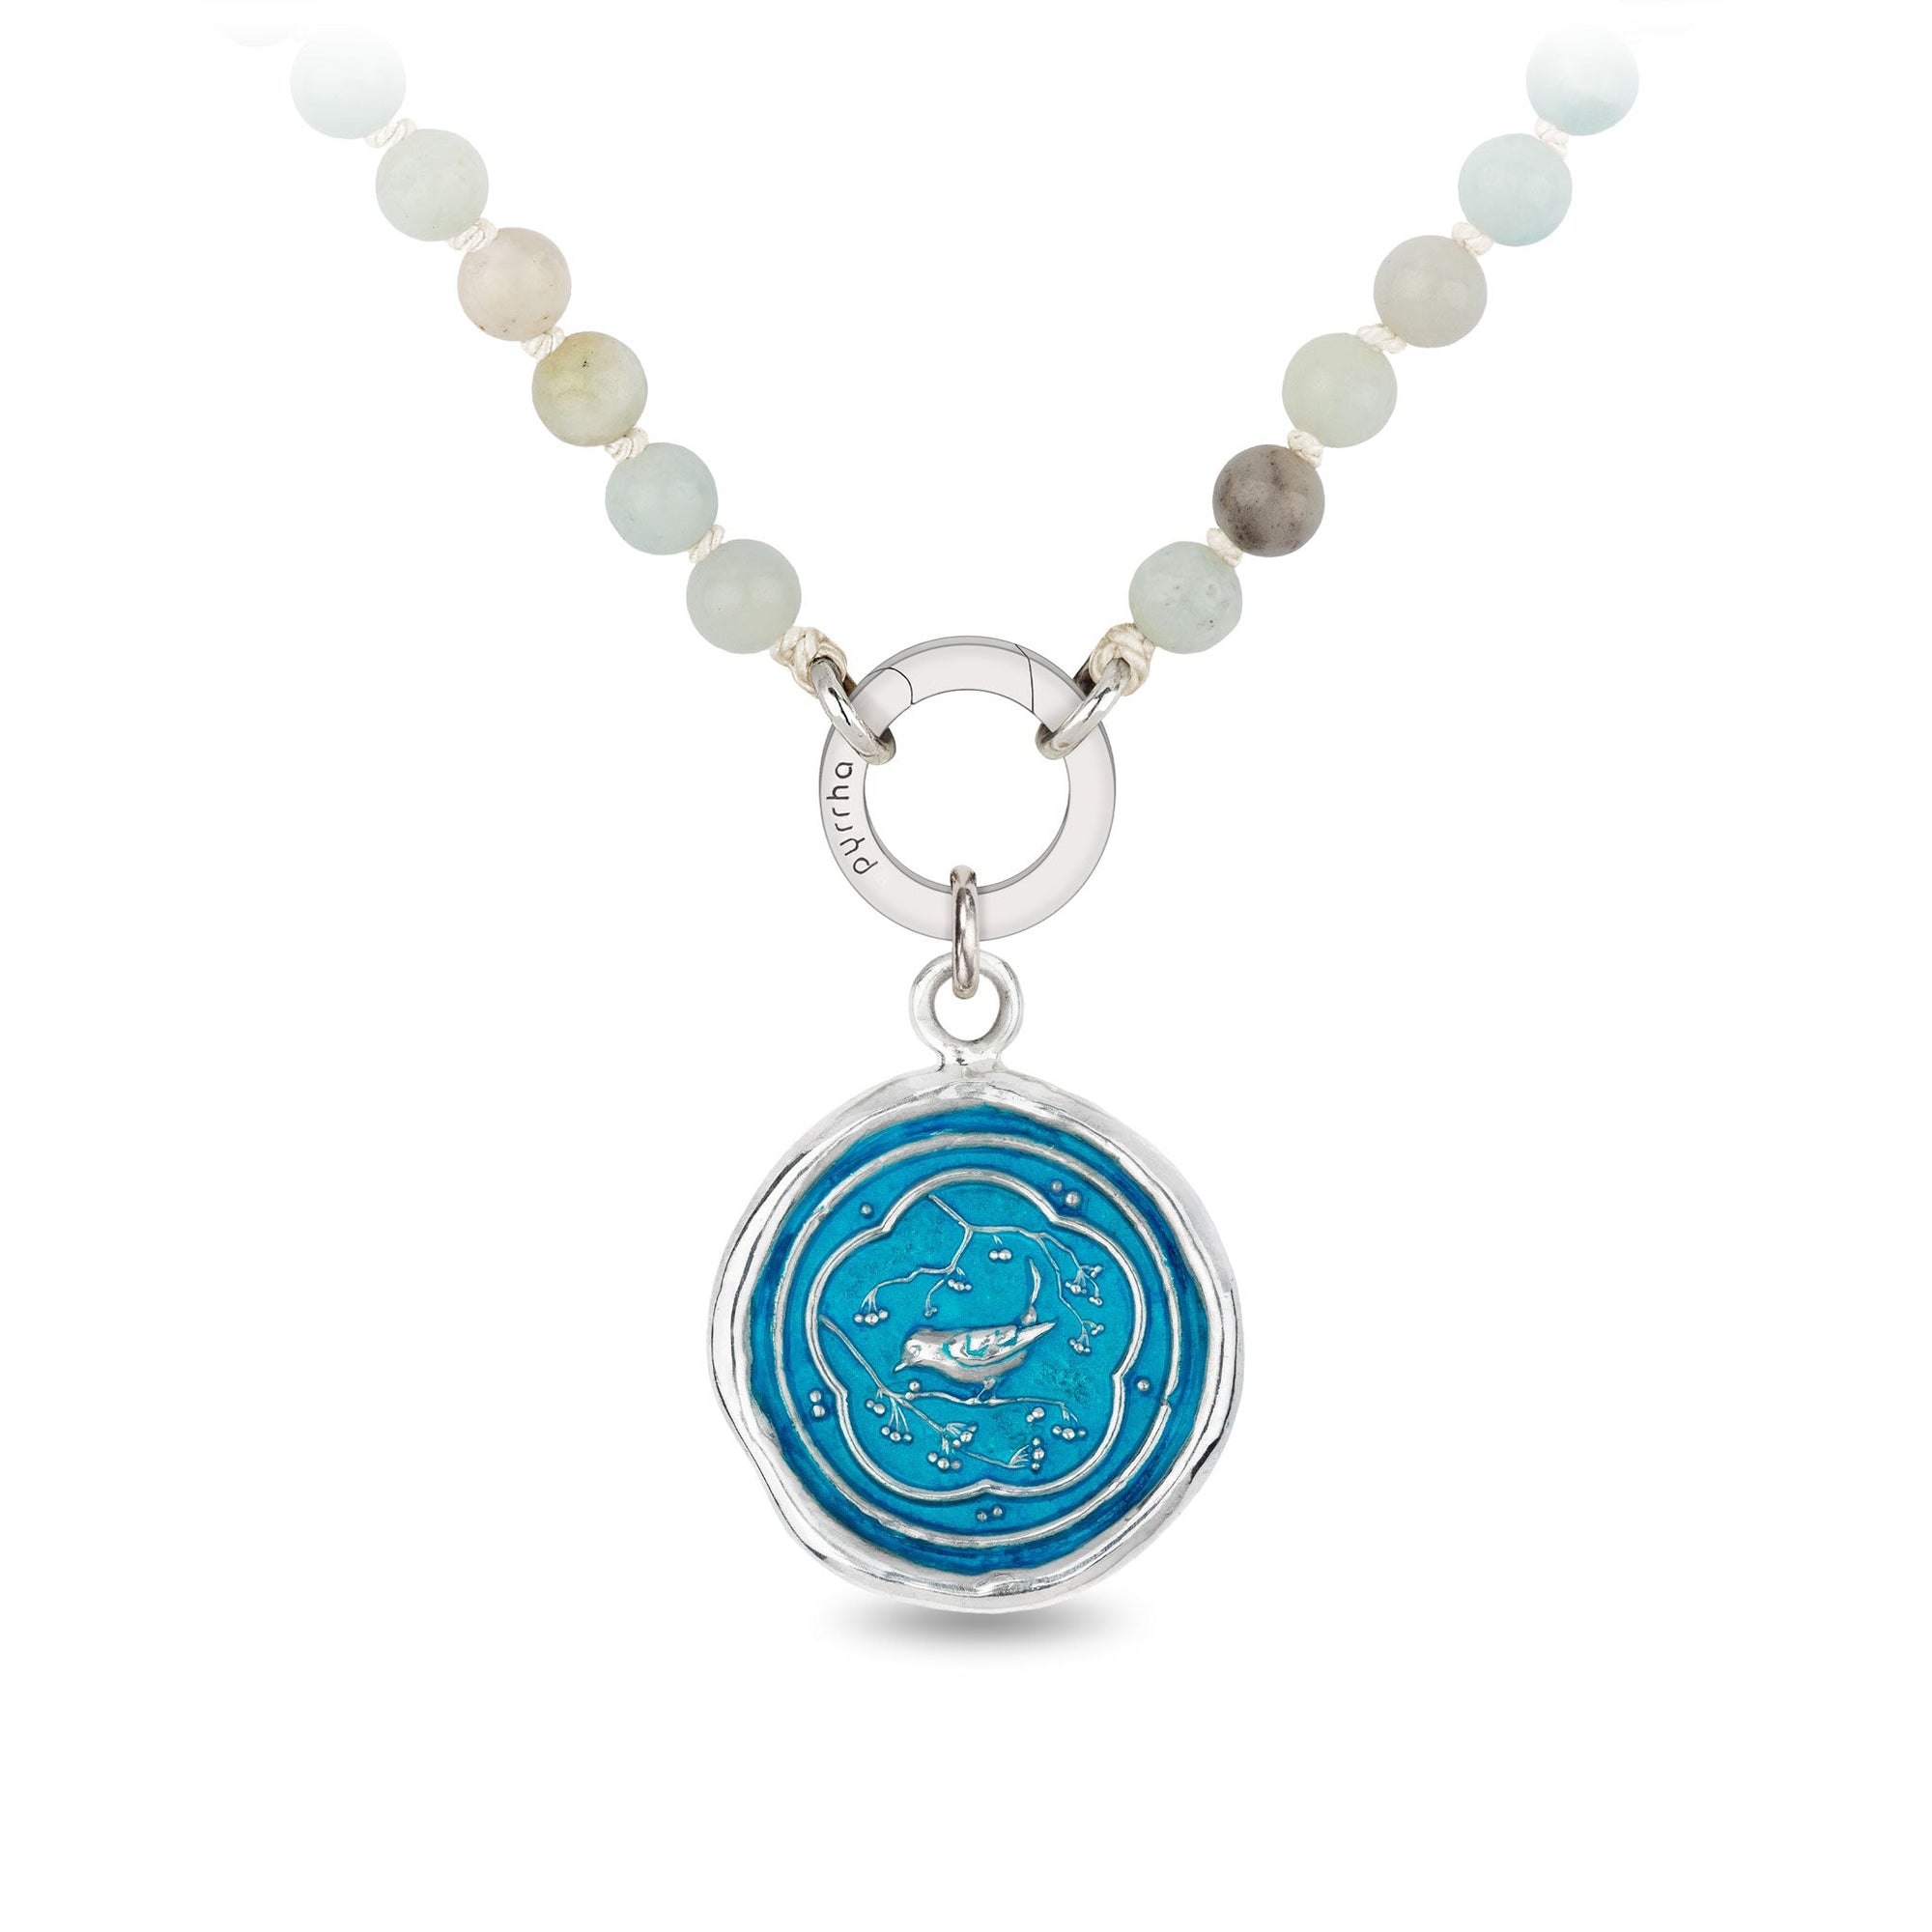 Keep It Simple Sautoir Necklace - Capri Blue